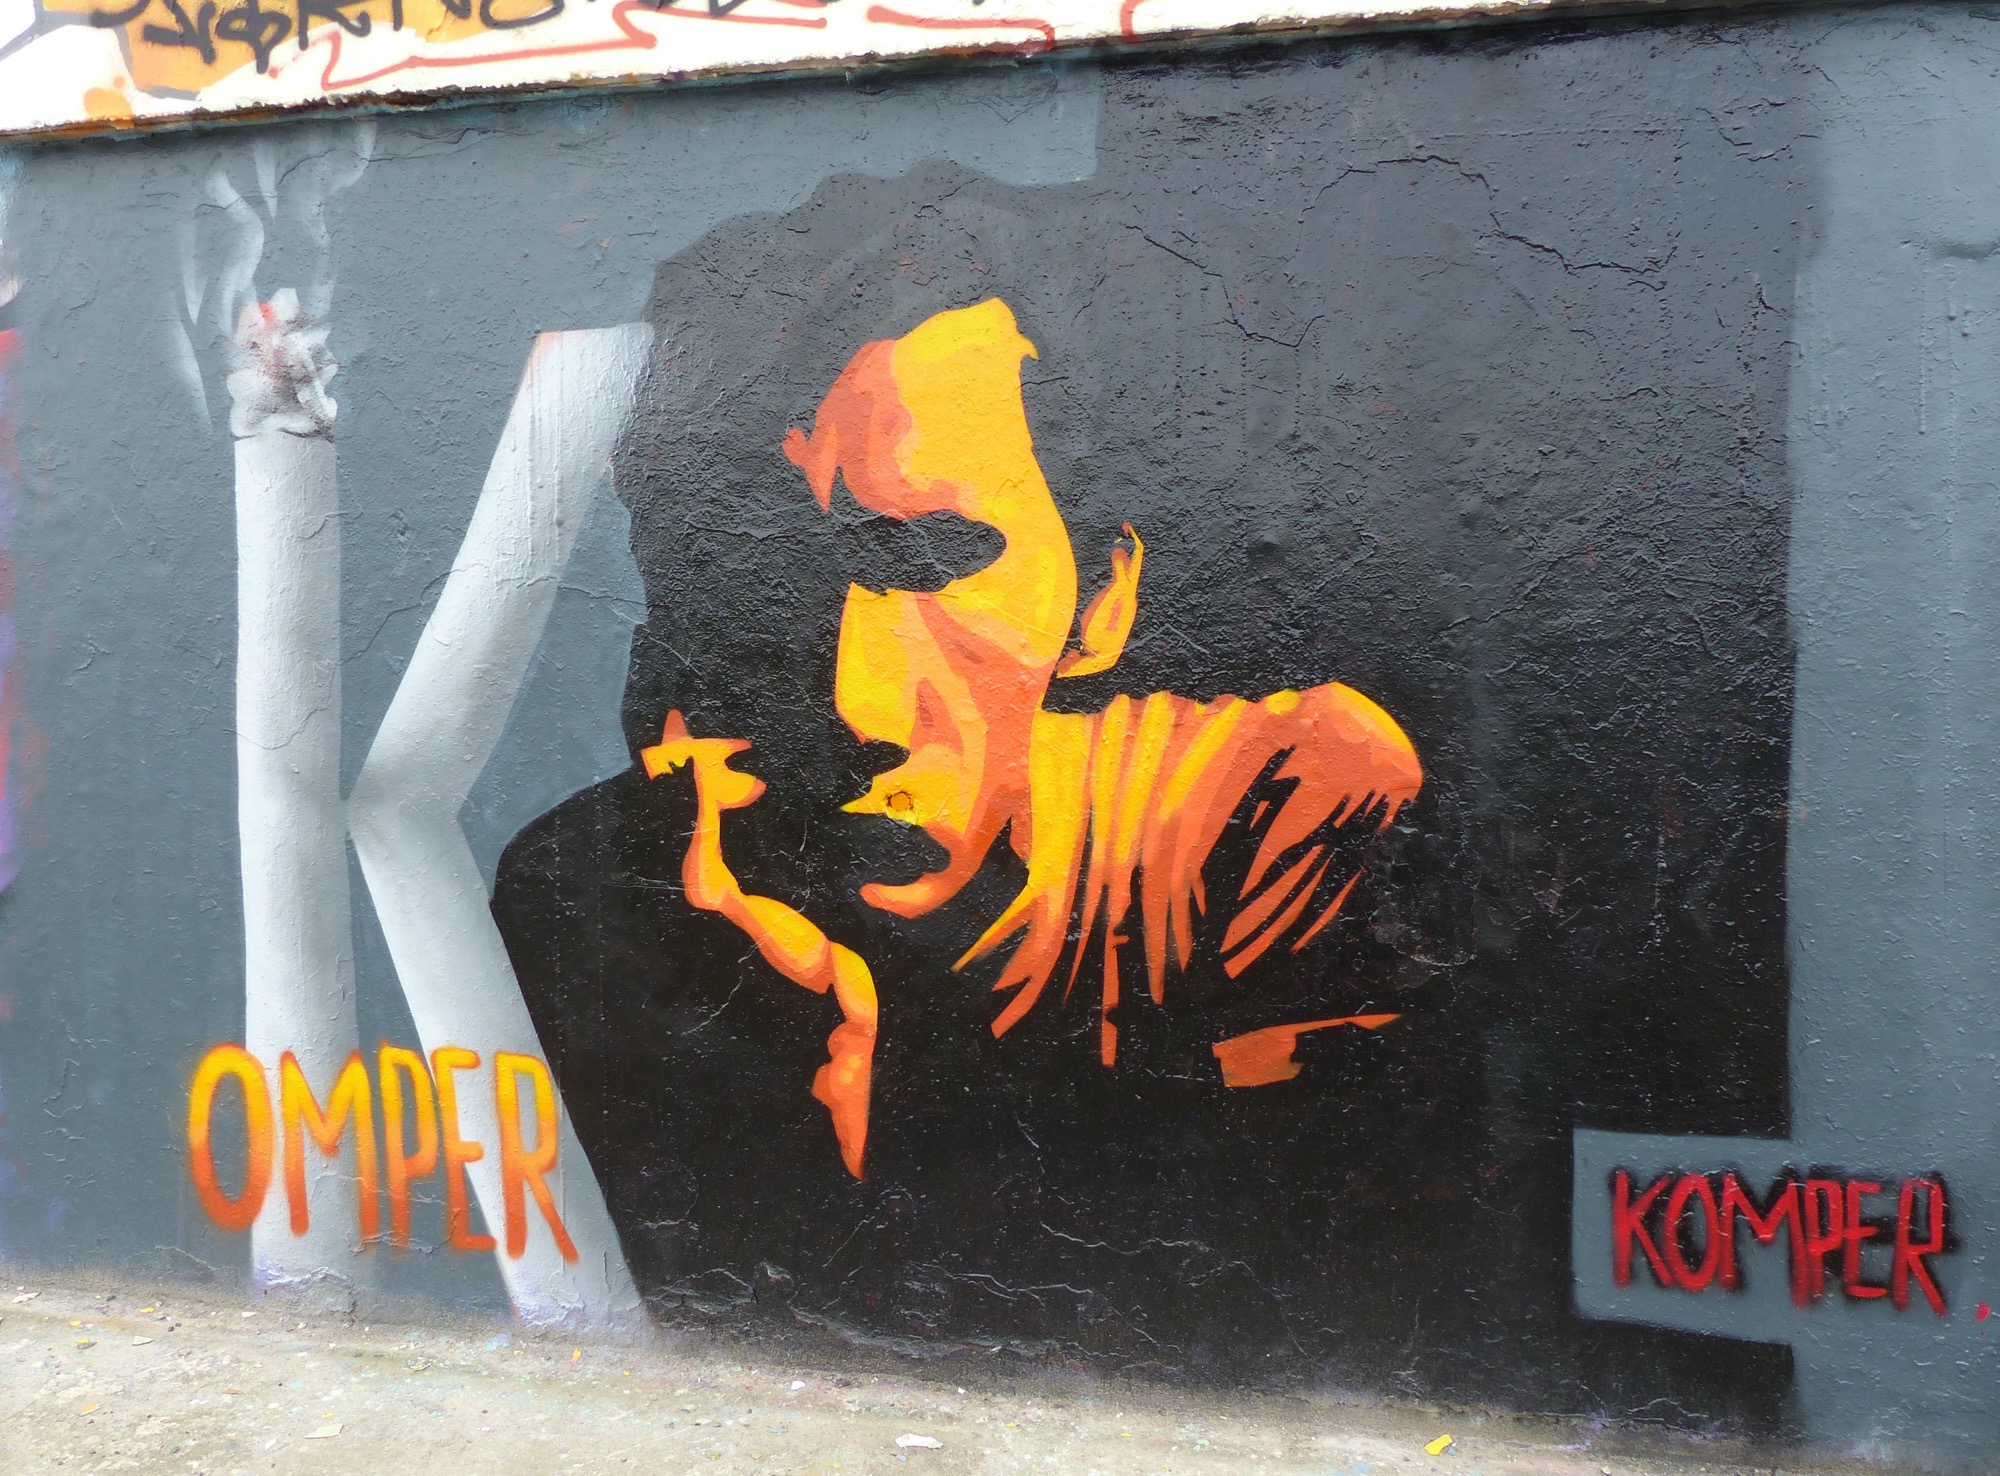 Graffiti 86  of Komper in Nantes France